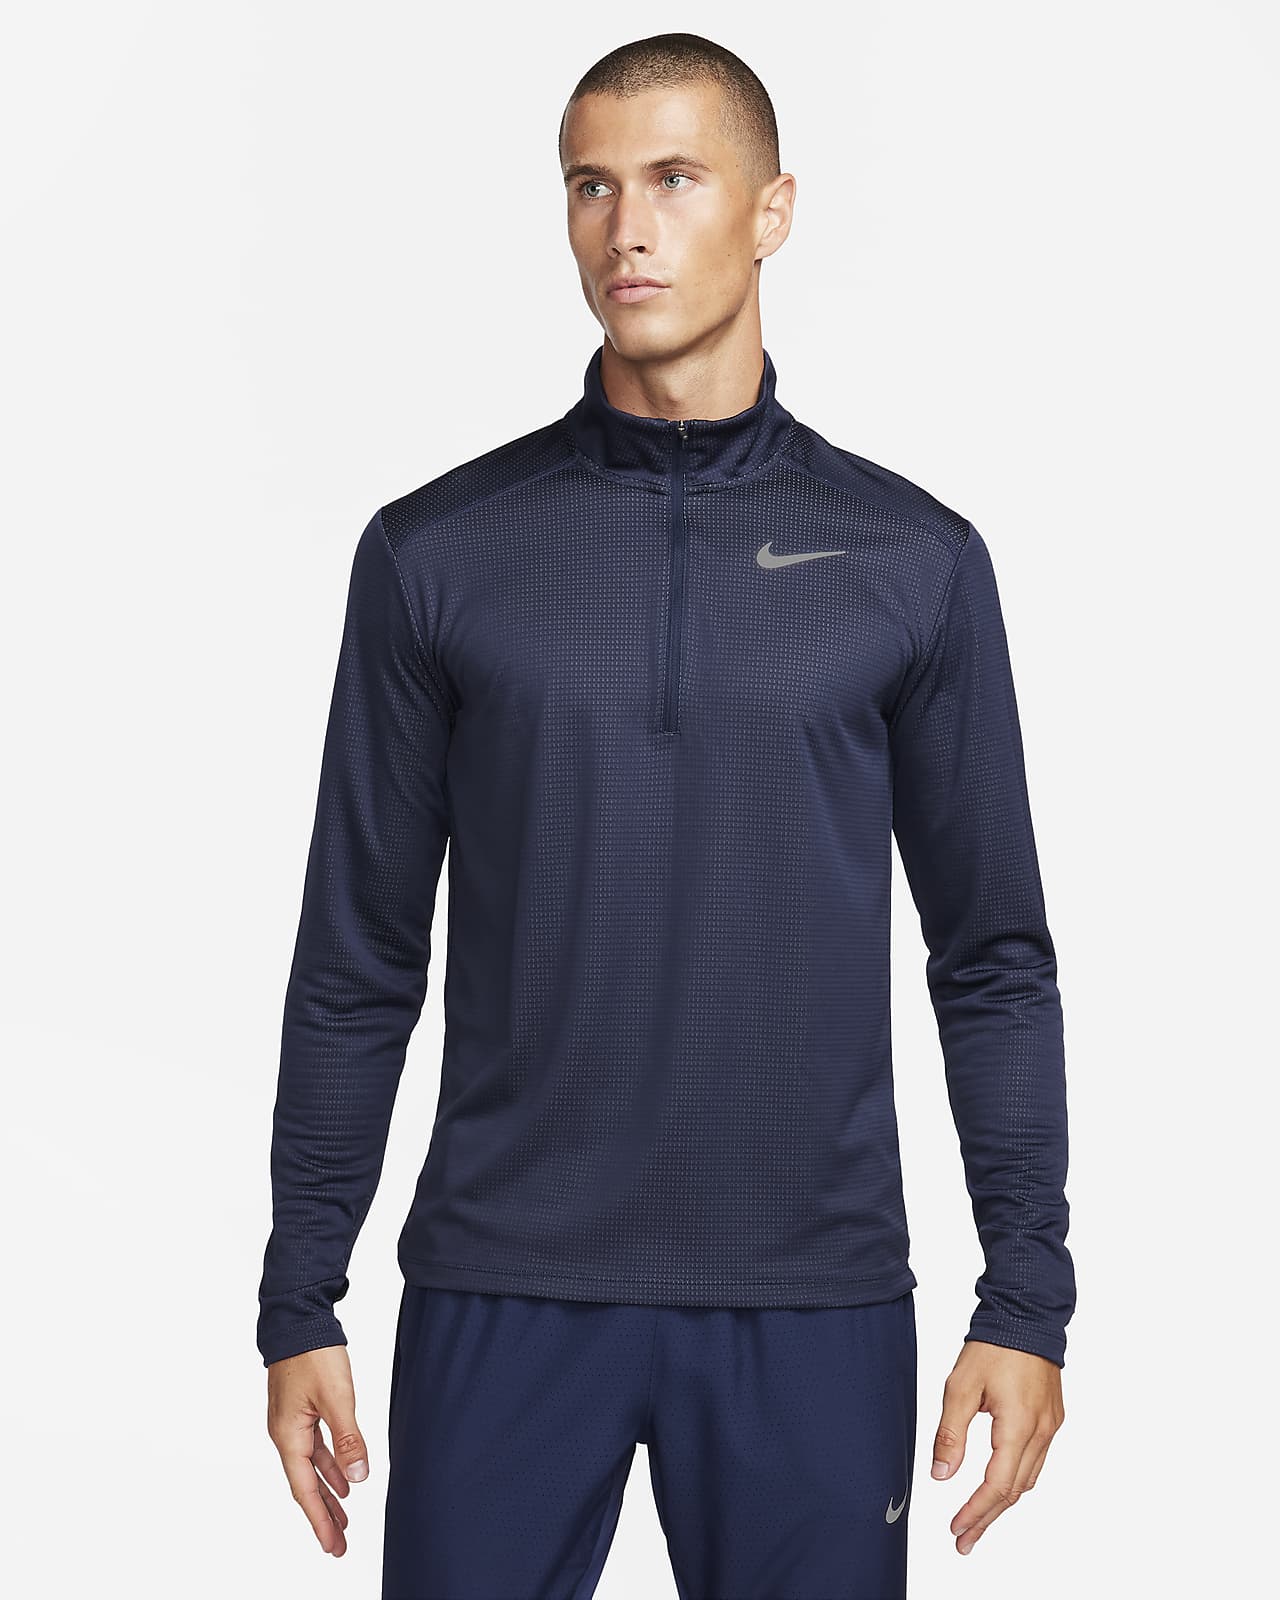 Pánský běžecký top s polovičním zipem Nike Pacer